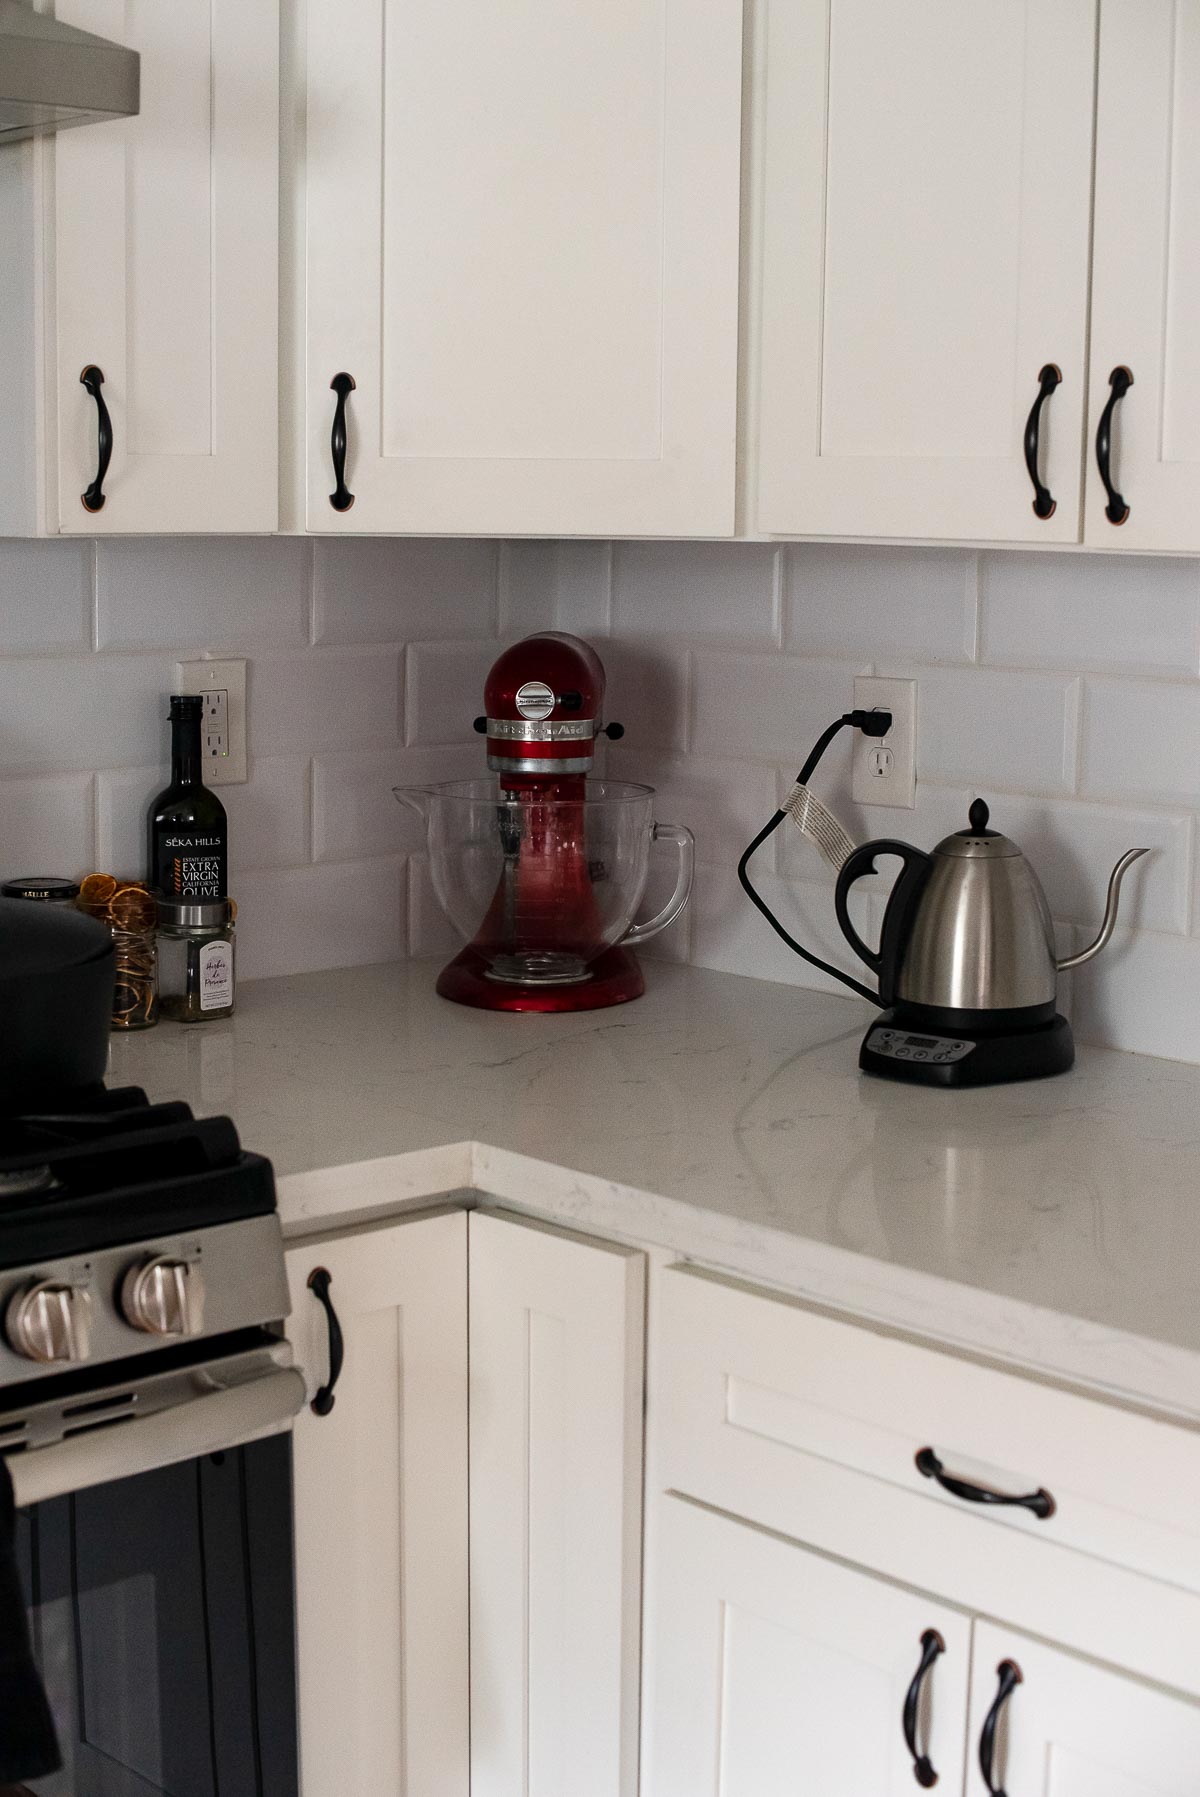 Kitchen Appliance Organization - Stand Mixer, Electric Kettle